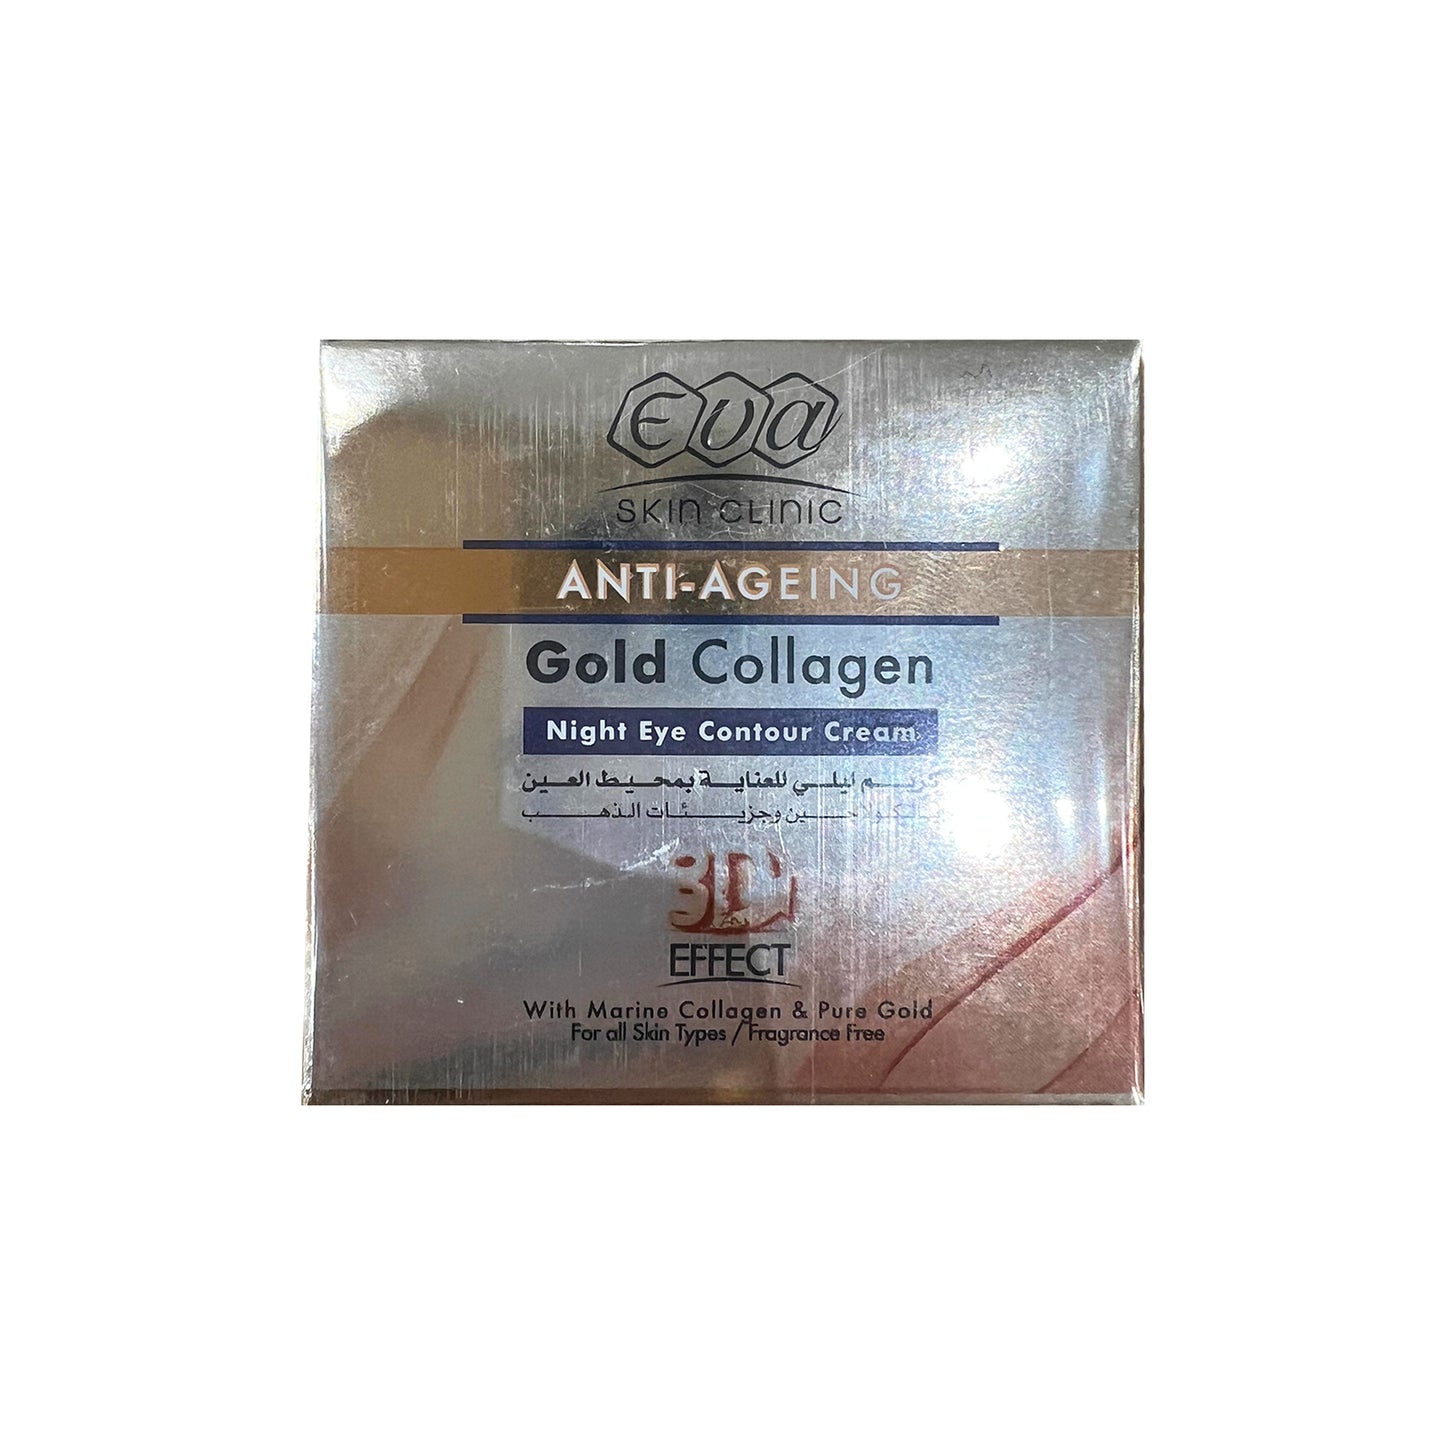 Eva skin clinic anti-ageing Gold Collagen night eye contour cream